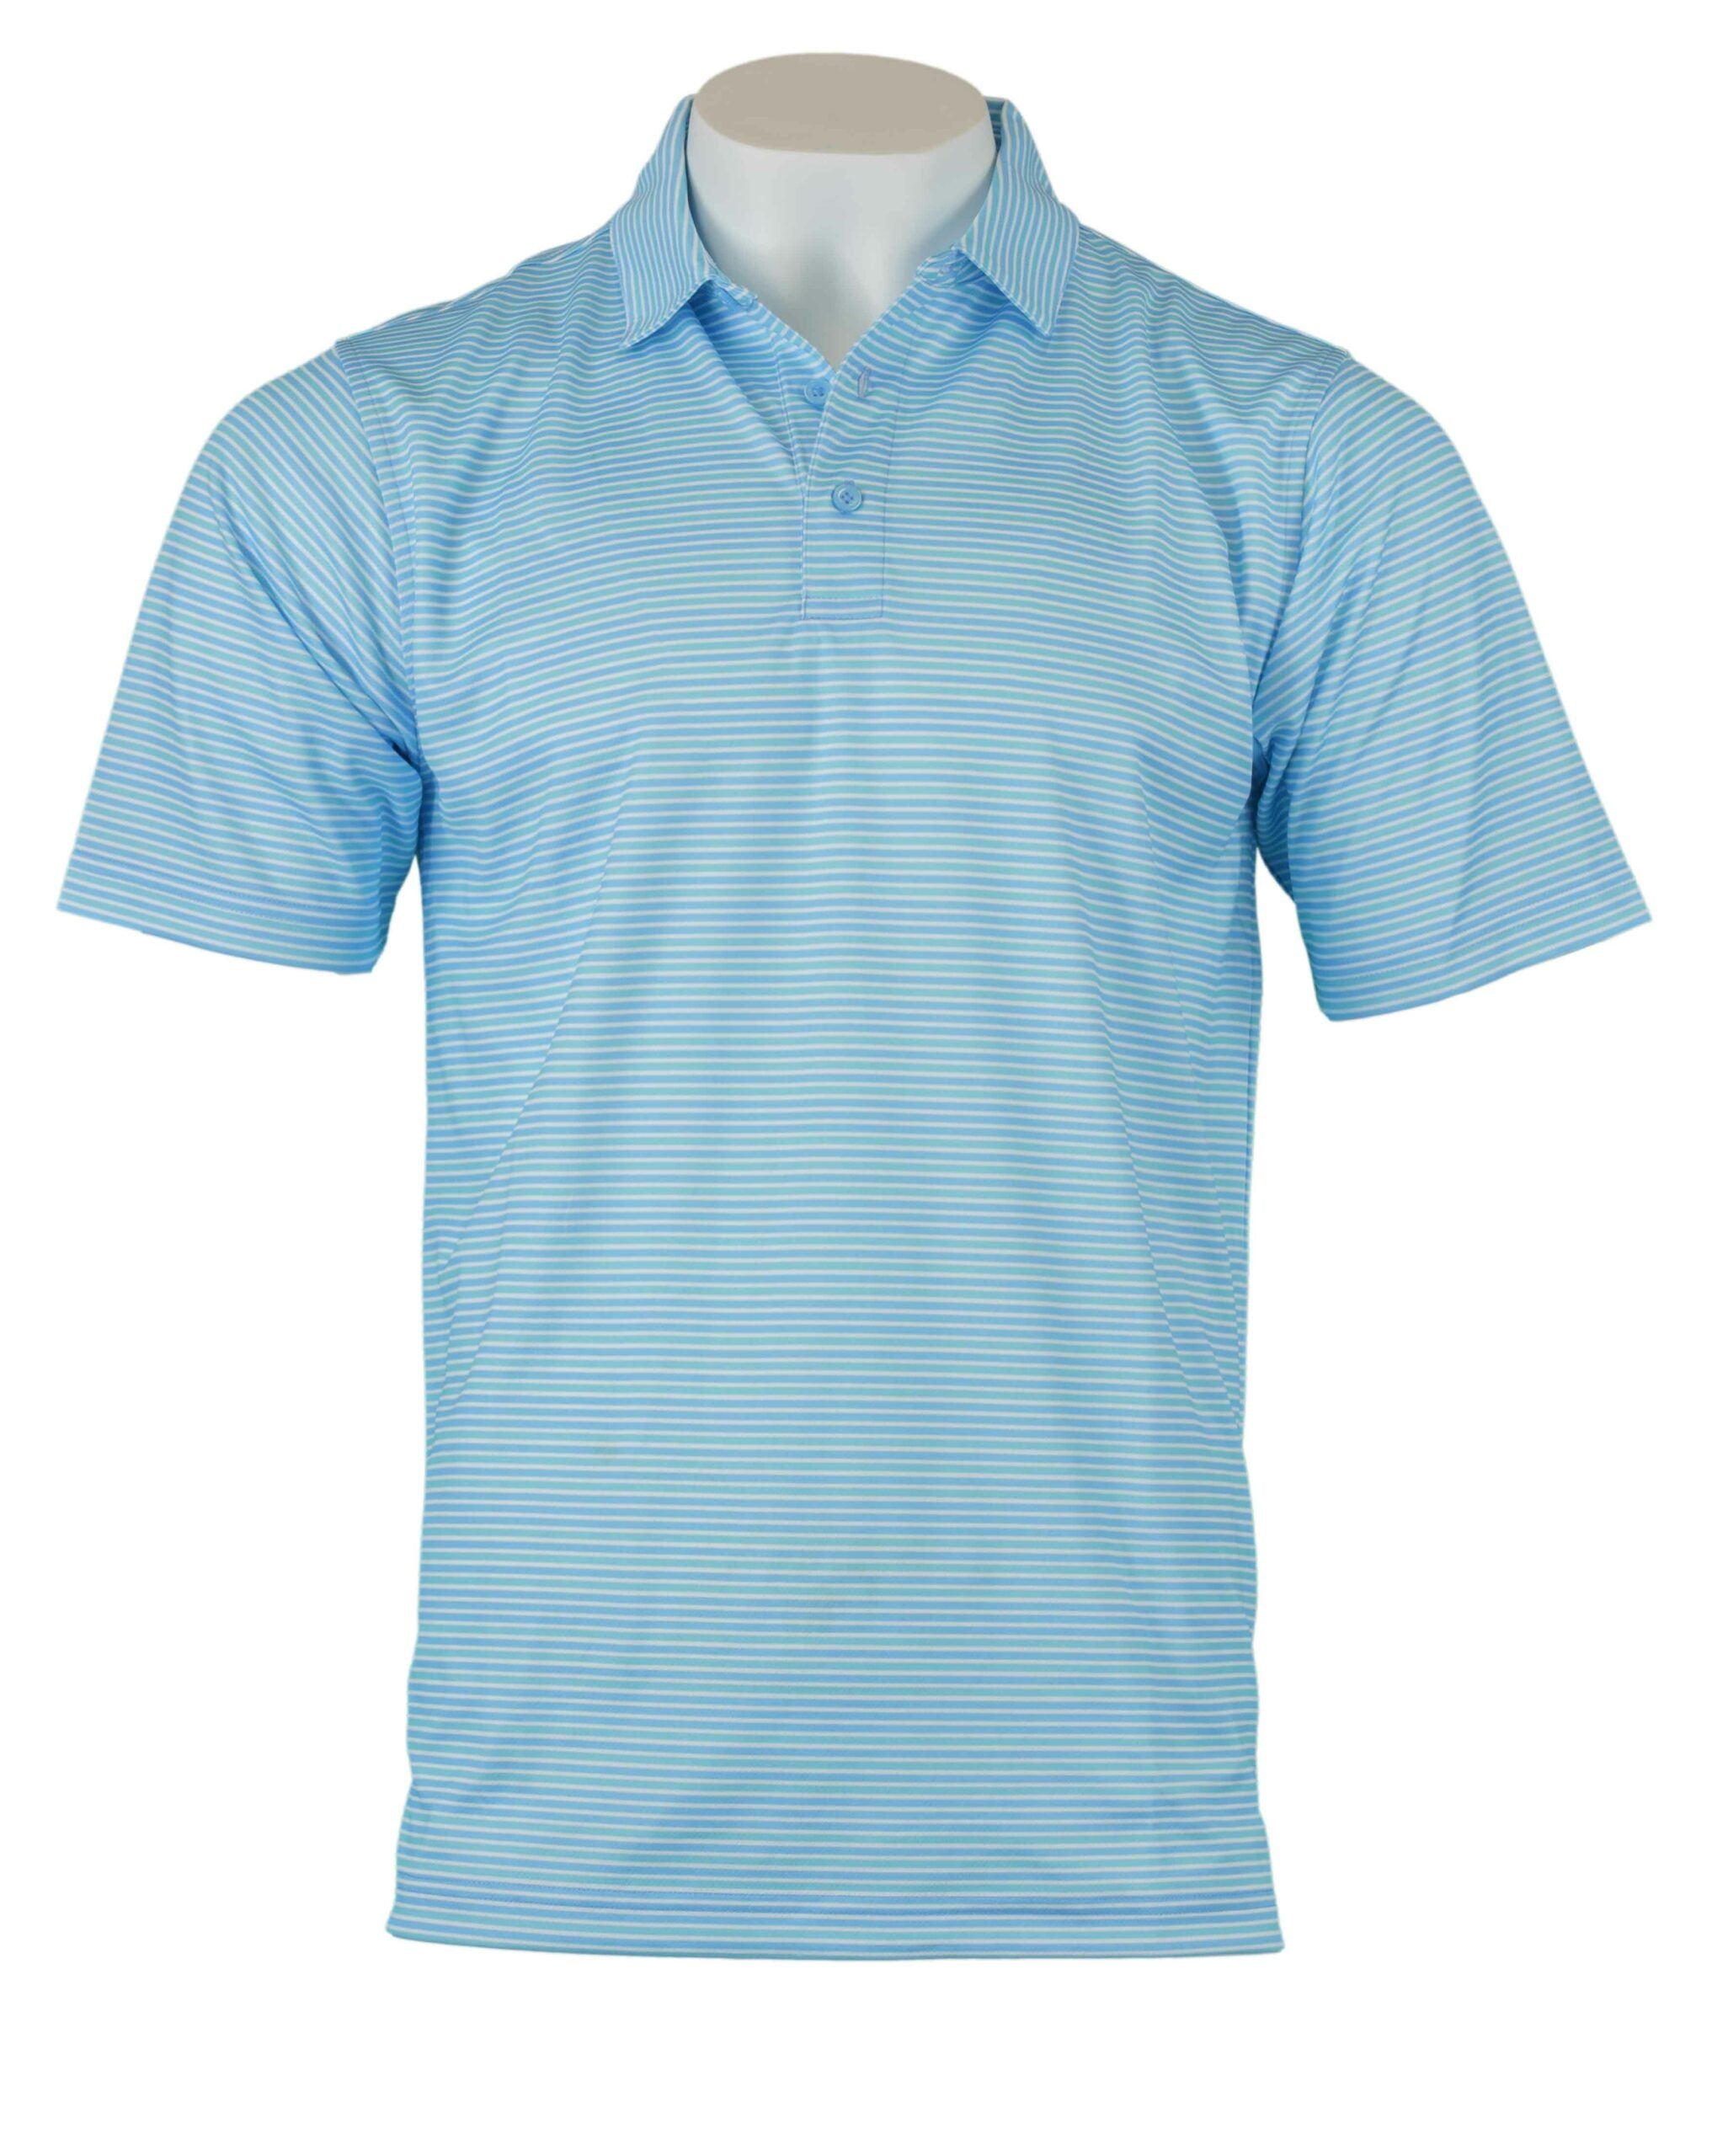 Pebble Beach Men's Performance Polo Shirt (Alaskan Blue, Large)